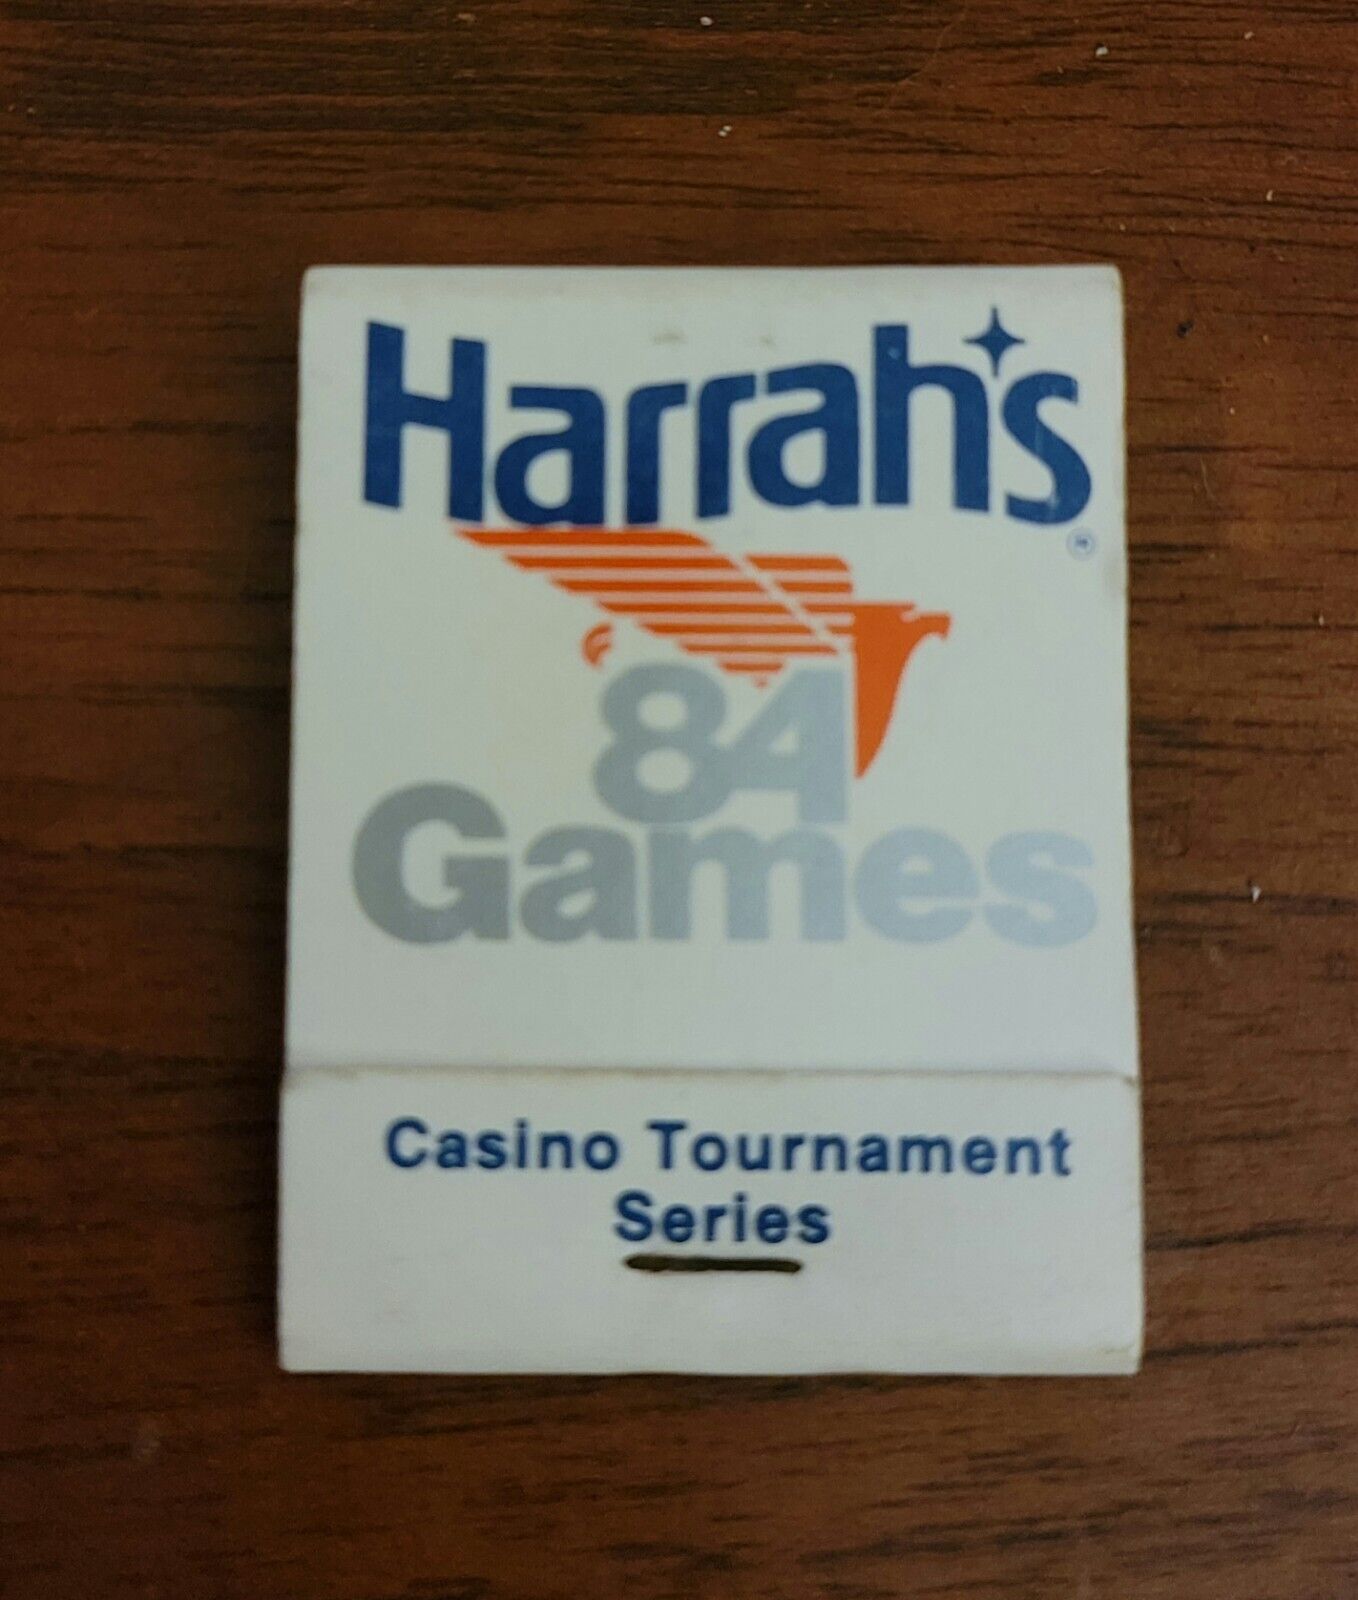 Harrahs 84 Games Casino Tournament Matchbook Match Box Vintage Matches Reno 